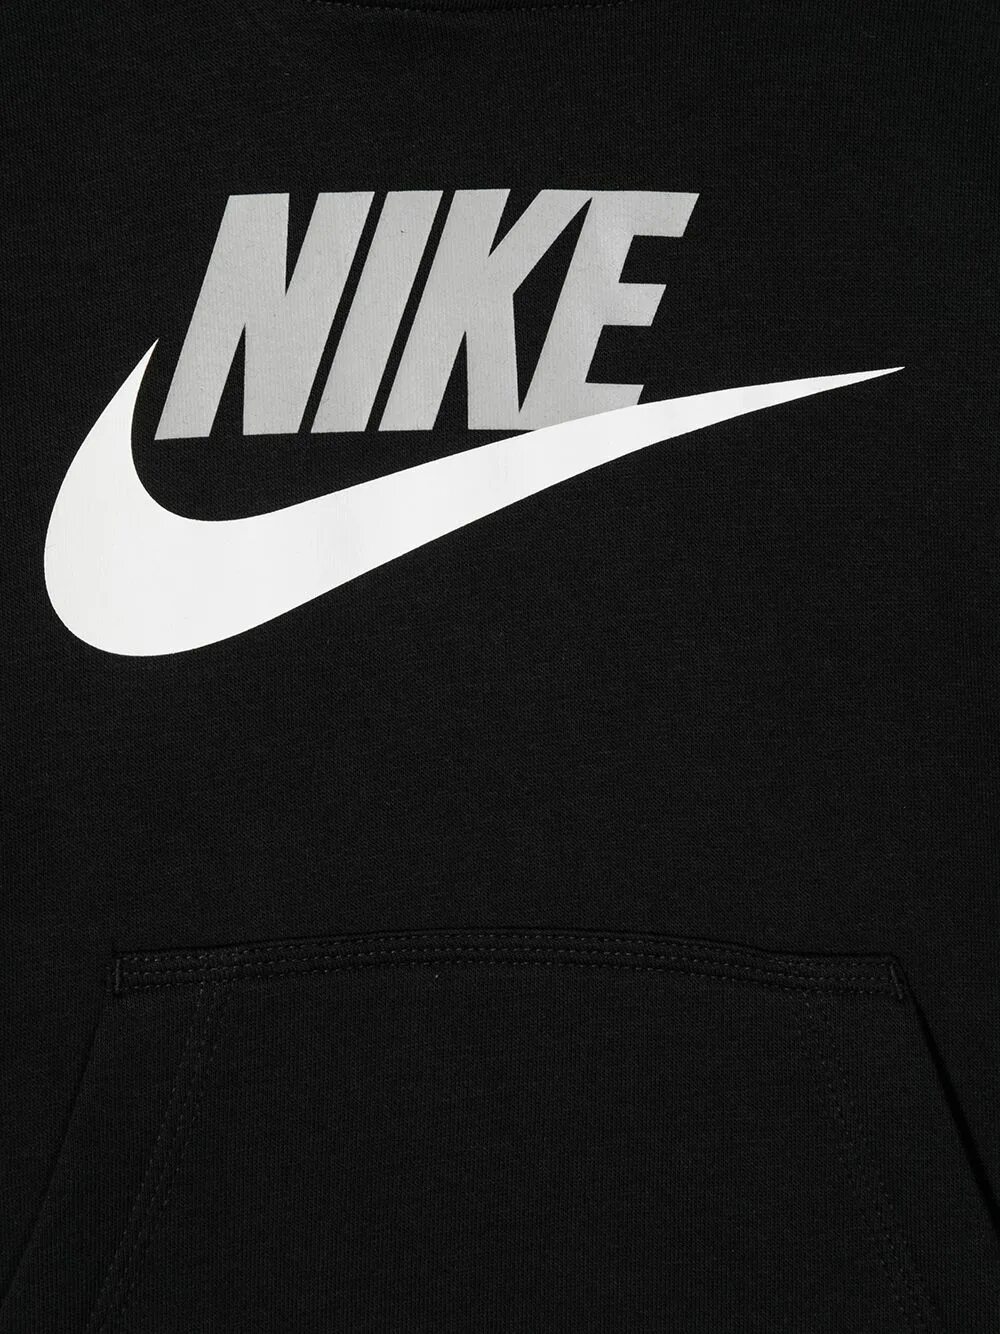 Каре найк. Найк. Nike знак. Бренд найк логотип. Nike логотип на магазине.